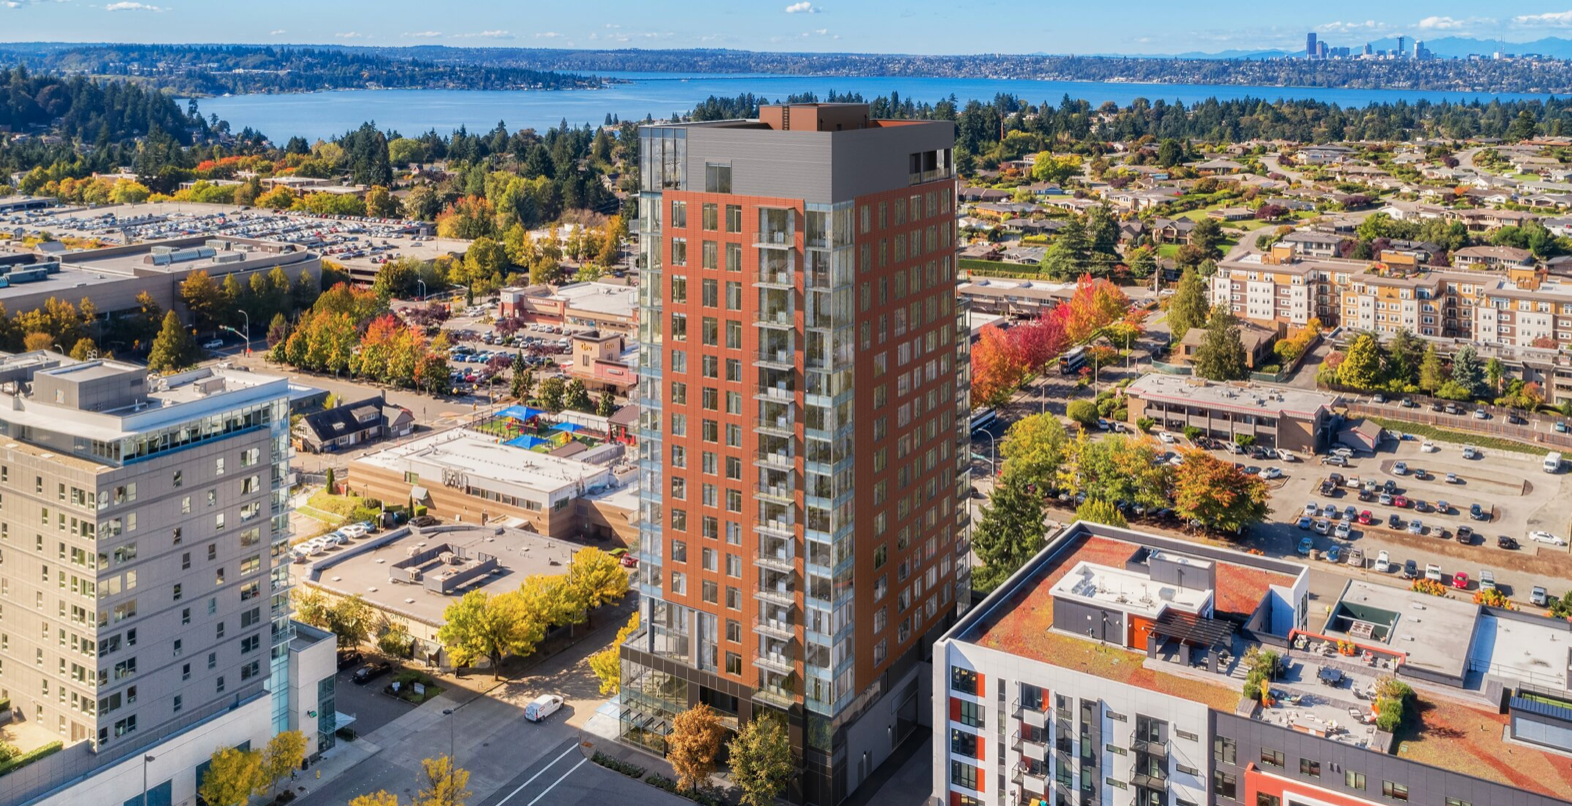 MARI, High-rise luxury condo building on NE 10th Street in Bellevue